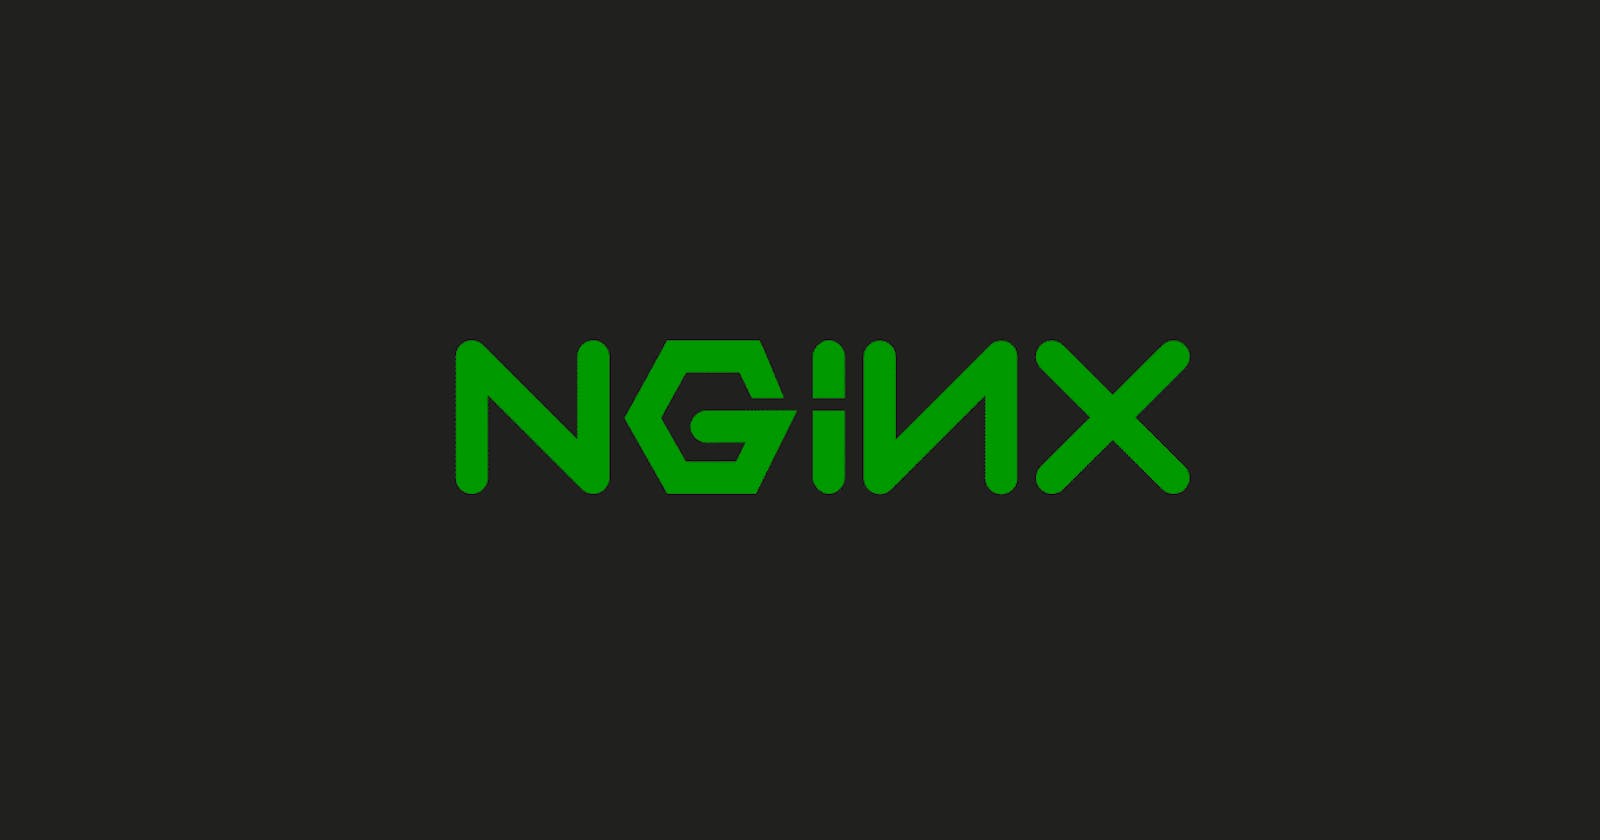 NGINX: A Powerful web server